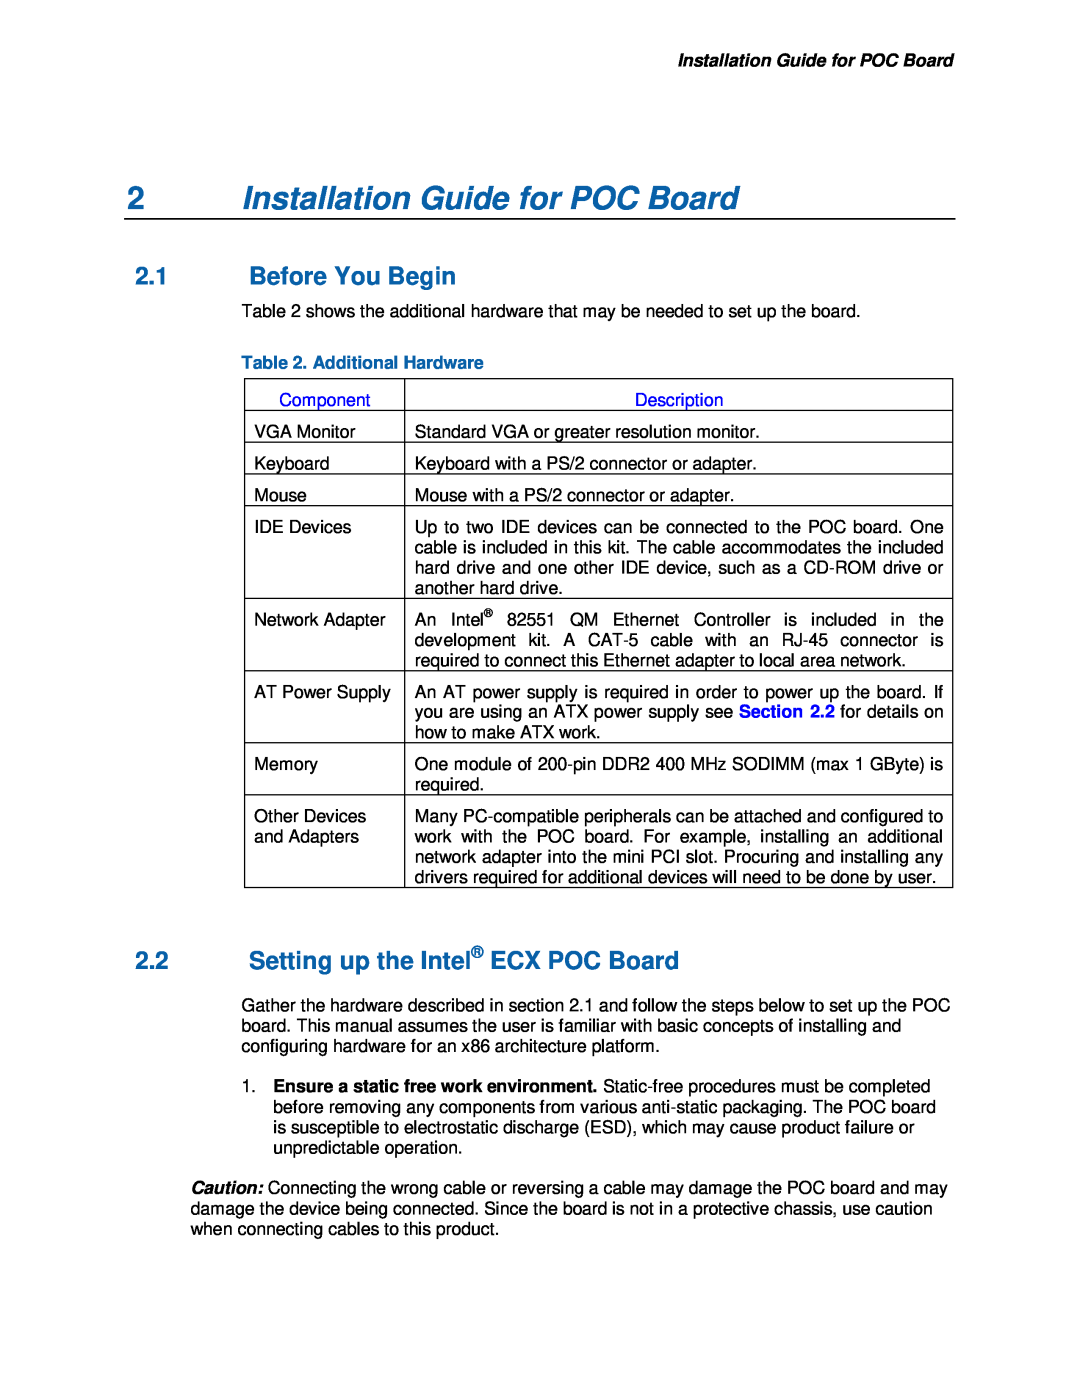 Intel 915GM 2Installation Guide for POC Board, 2.1Before You Begin, 2.2Setting up the Intel ECX POC Board, Component 